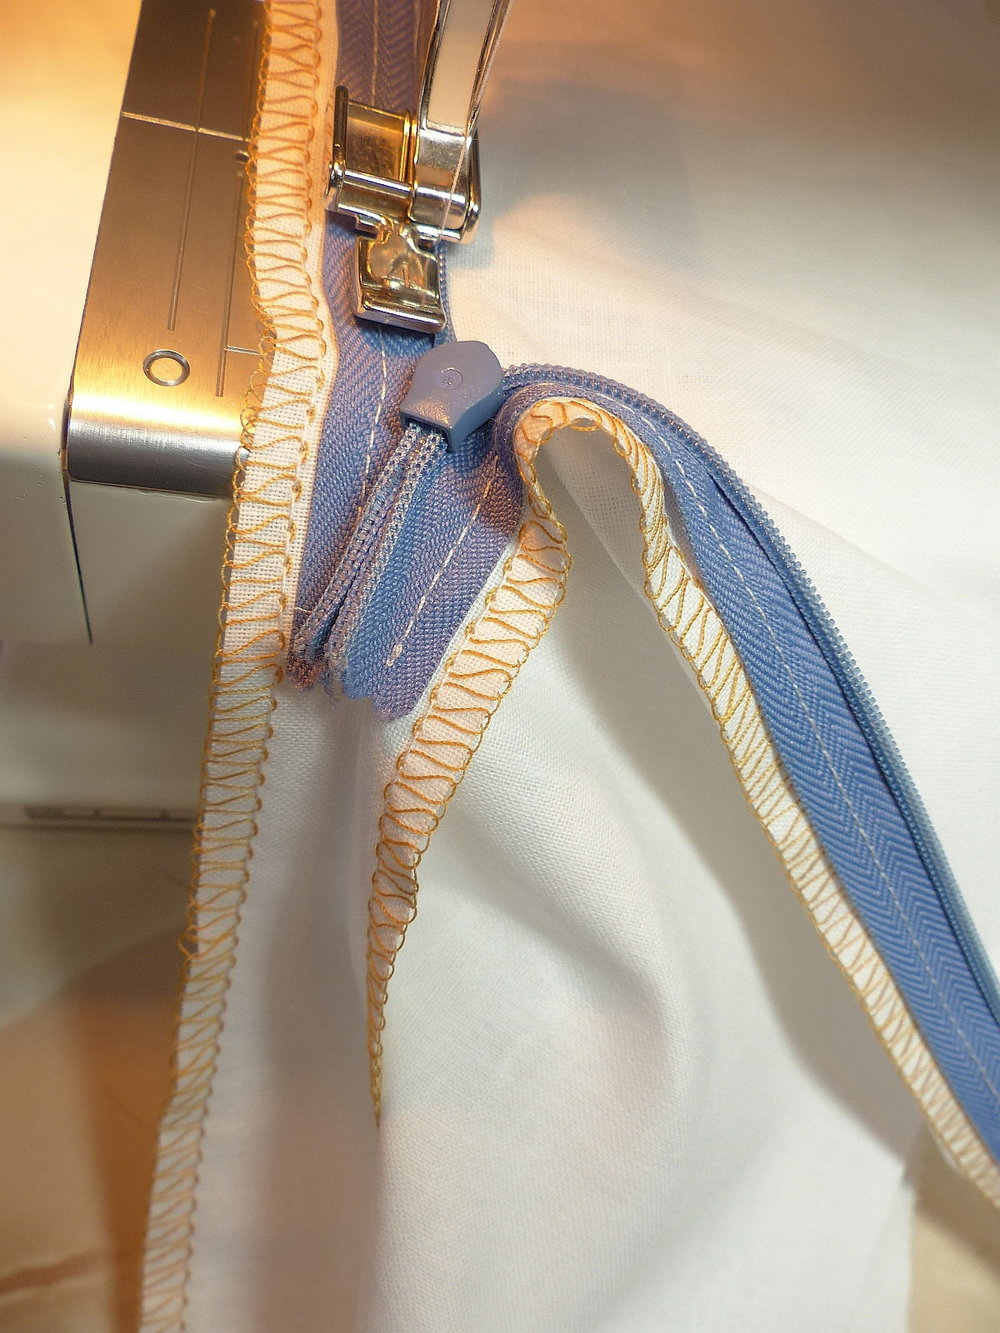 Concealed zip method using a standard zipper foot